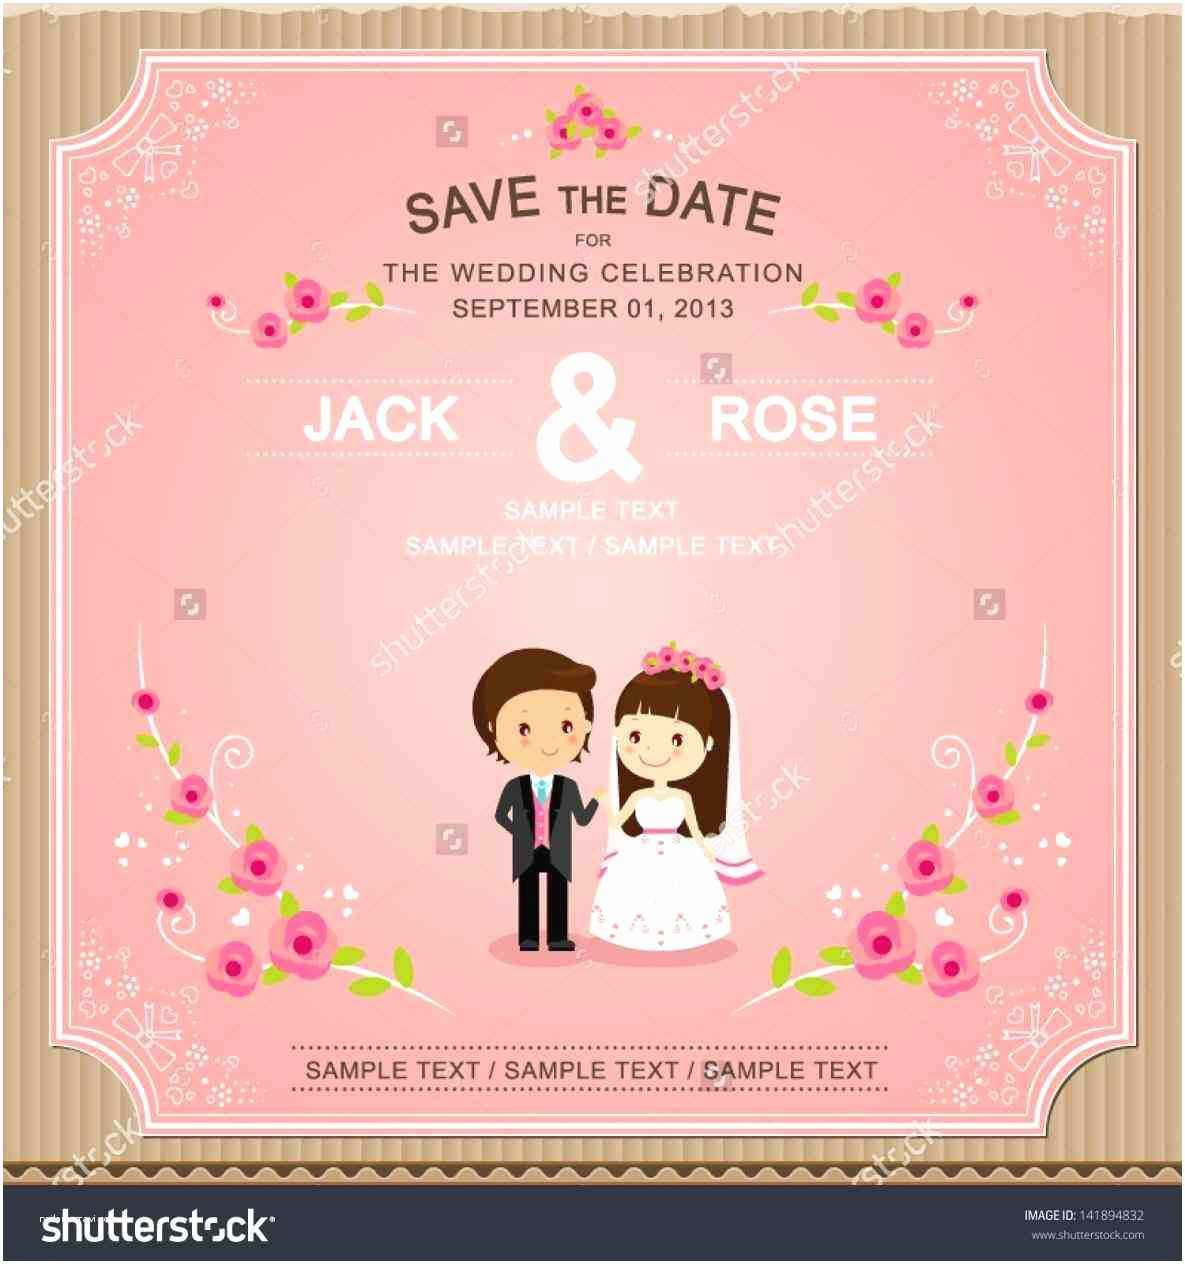 Online Editable Wedding Invitation Cards Free Download With Regard To Free E Wedding Invitation Card Templates